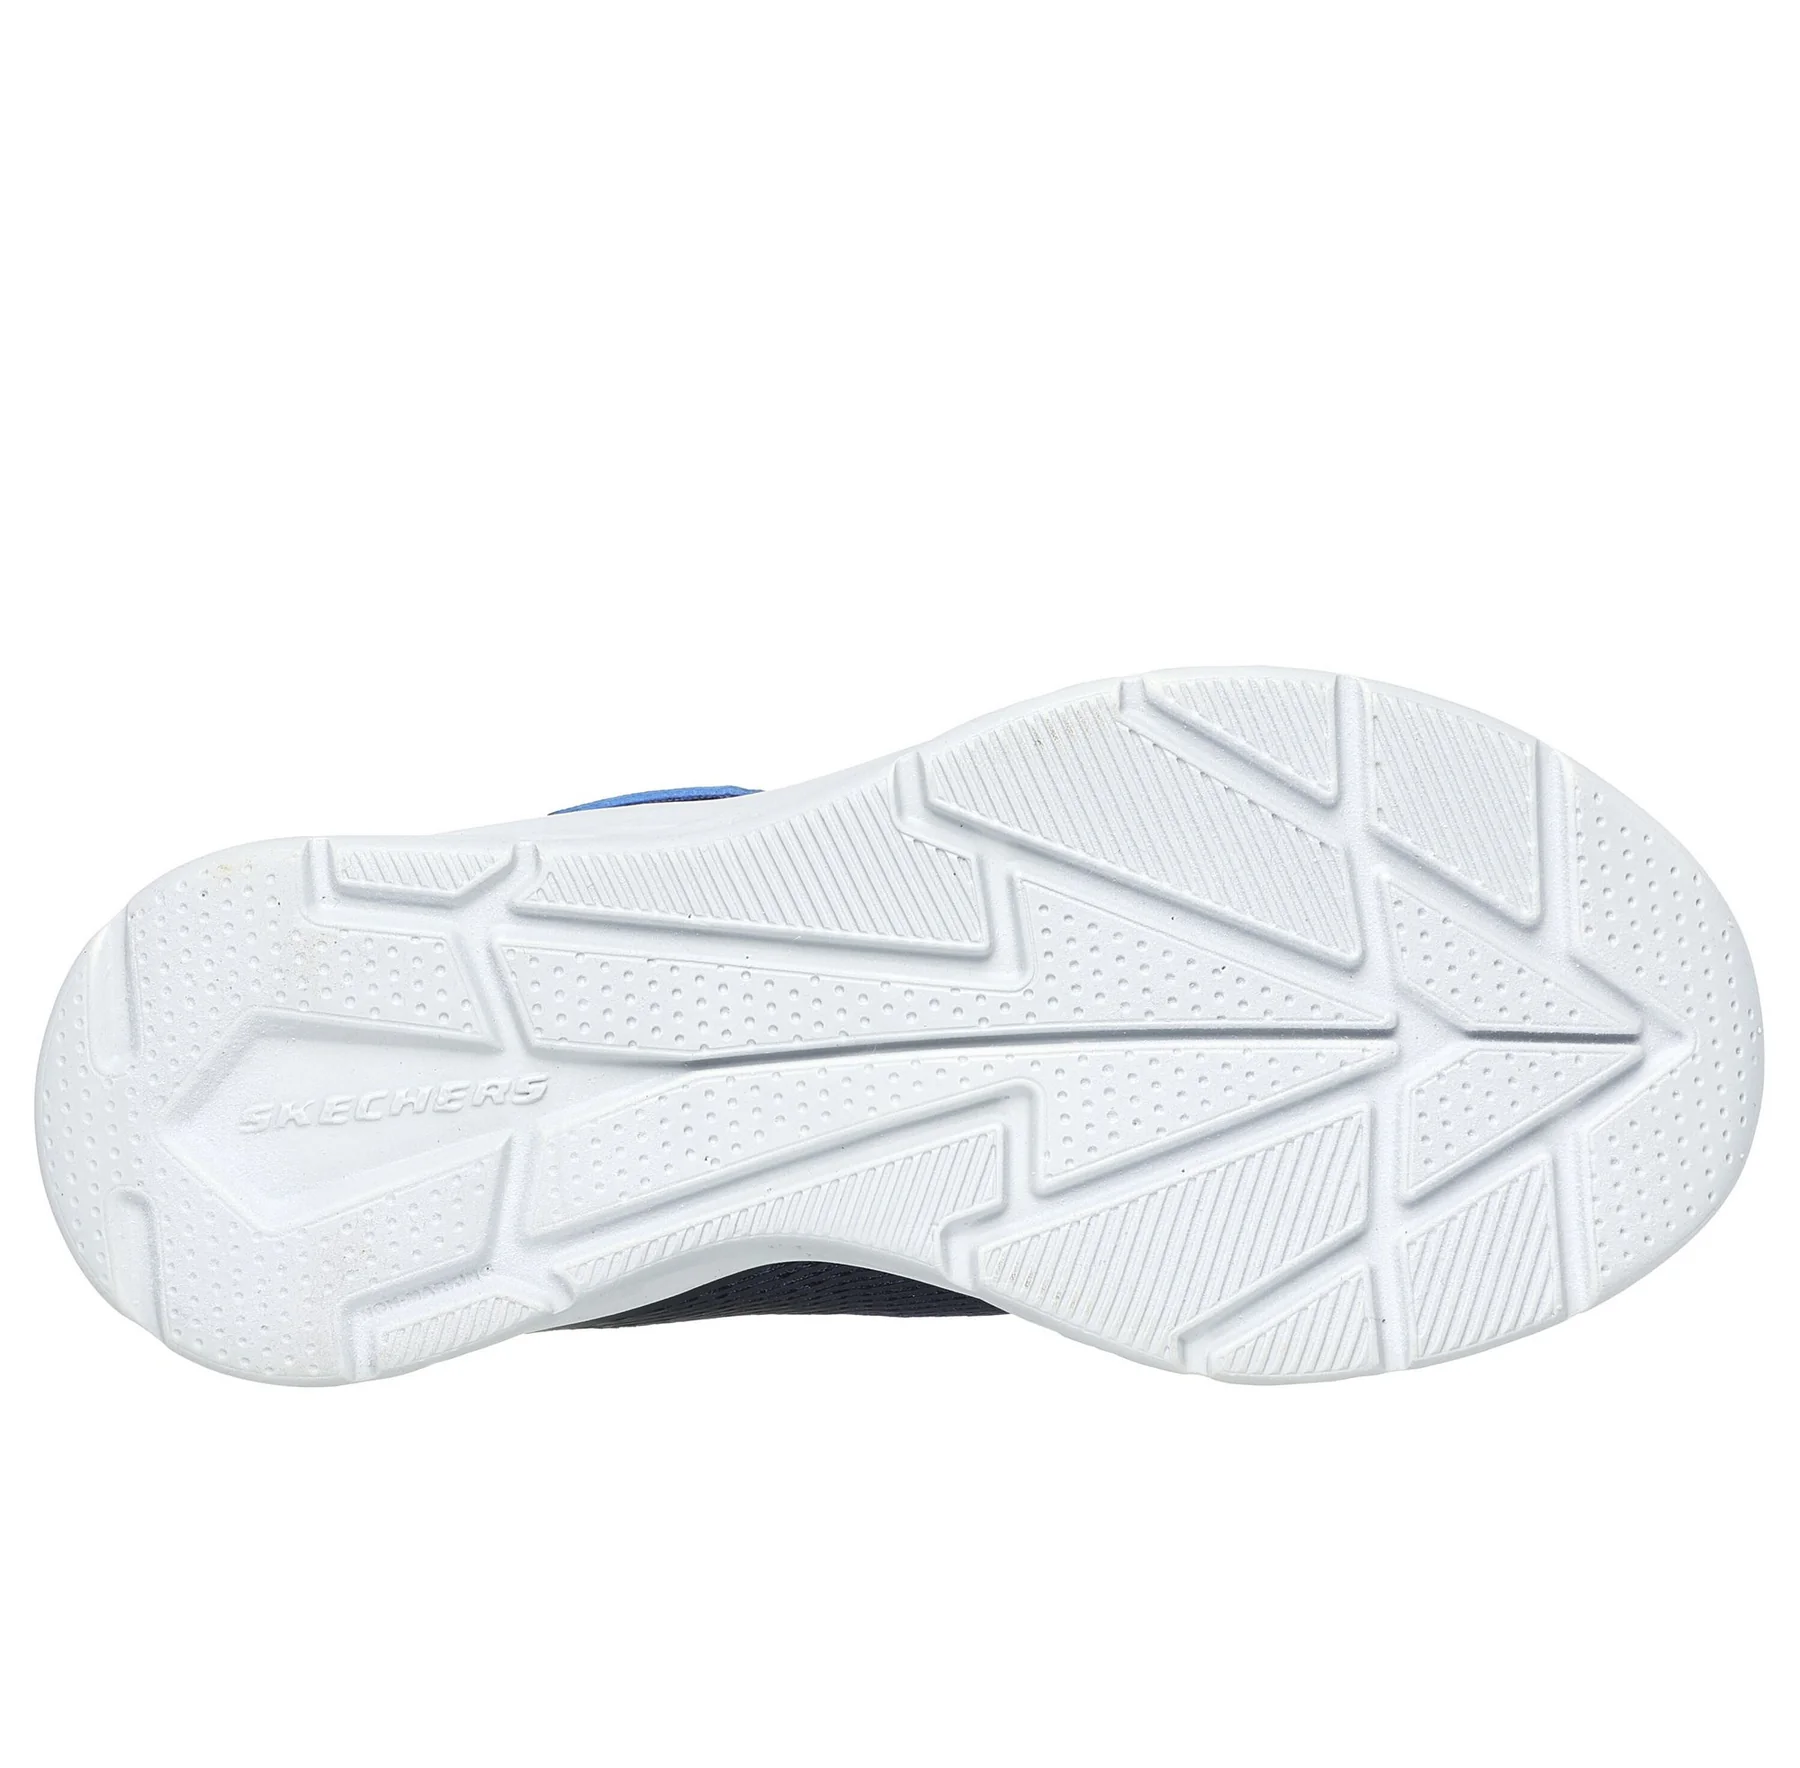 Skechers scarpa da ginnastica da ragazzo Microspec II Zovrix 403924LNBLM blu-nero-lime